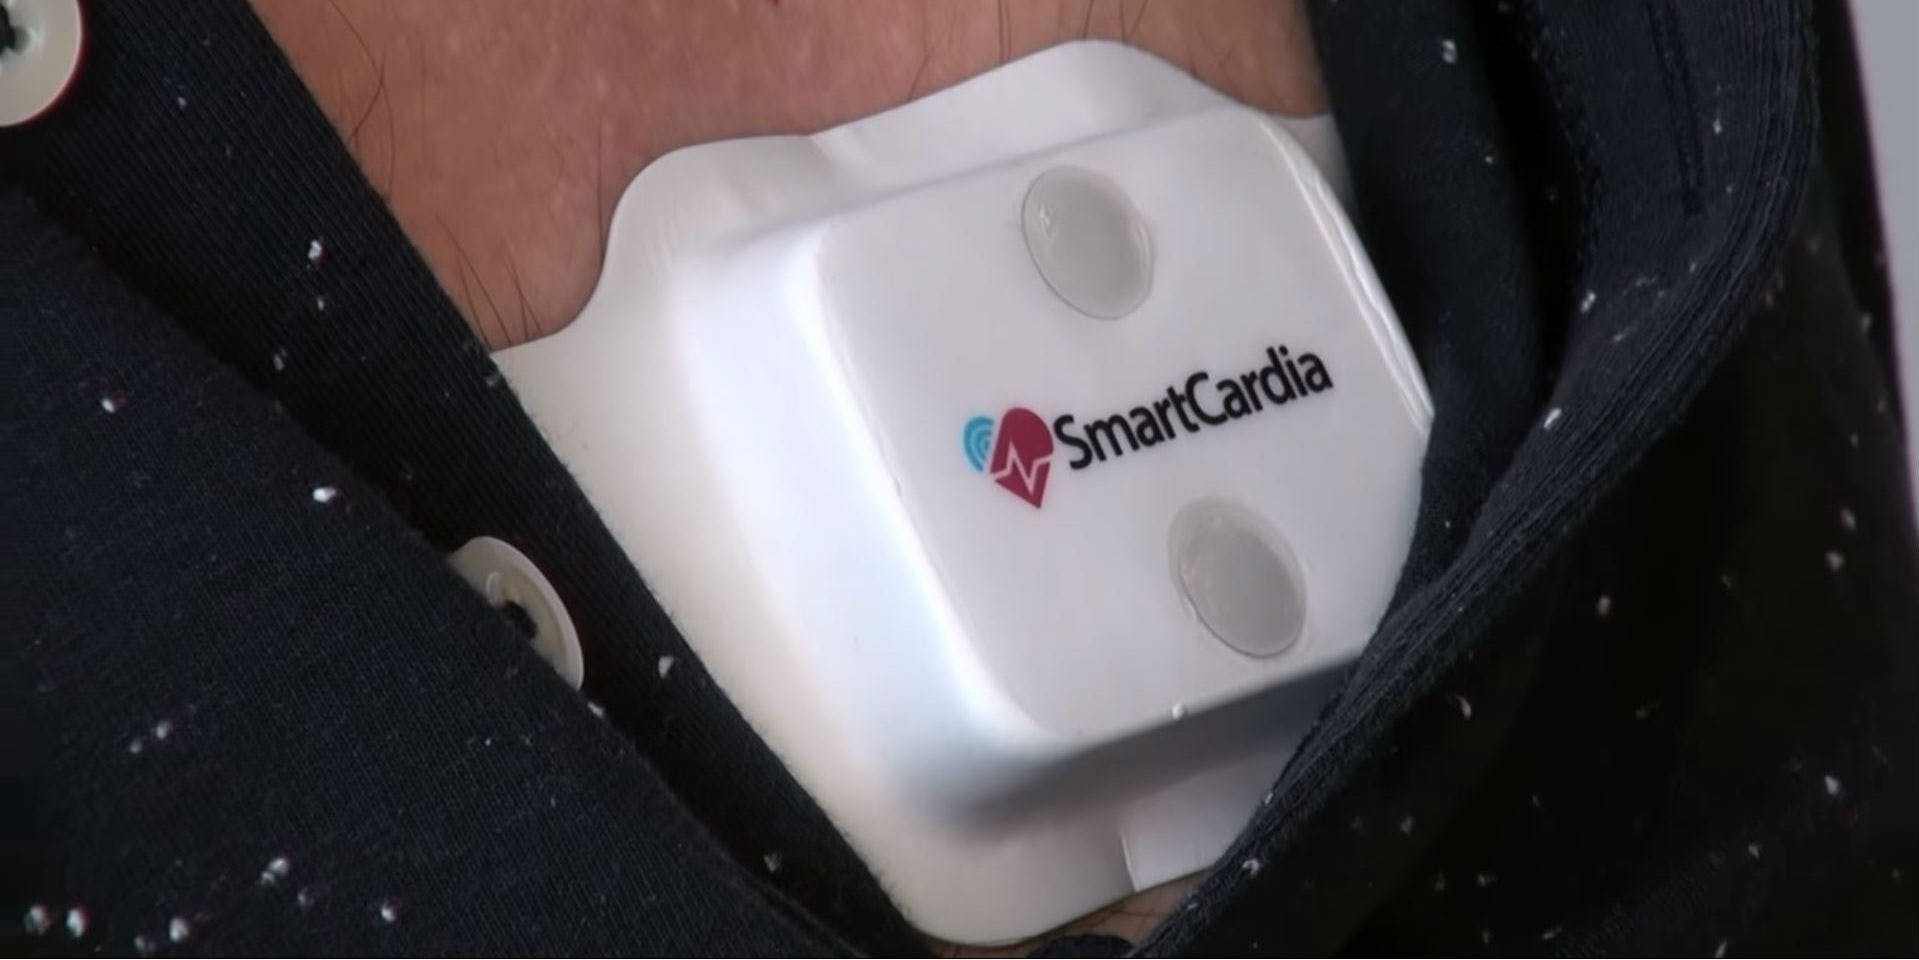 smartcardia wearable health patch heart